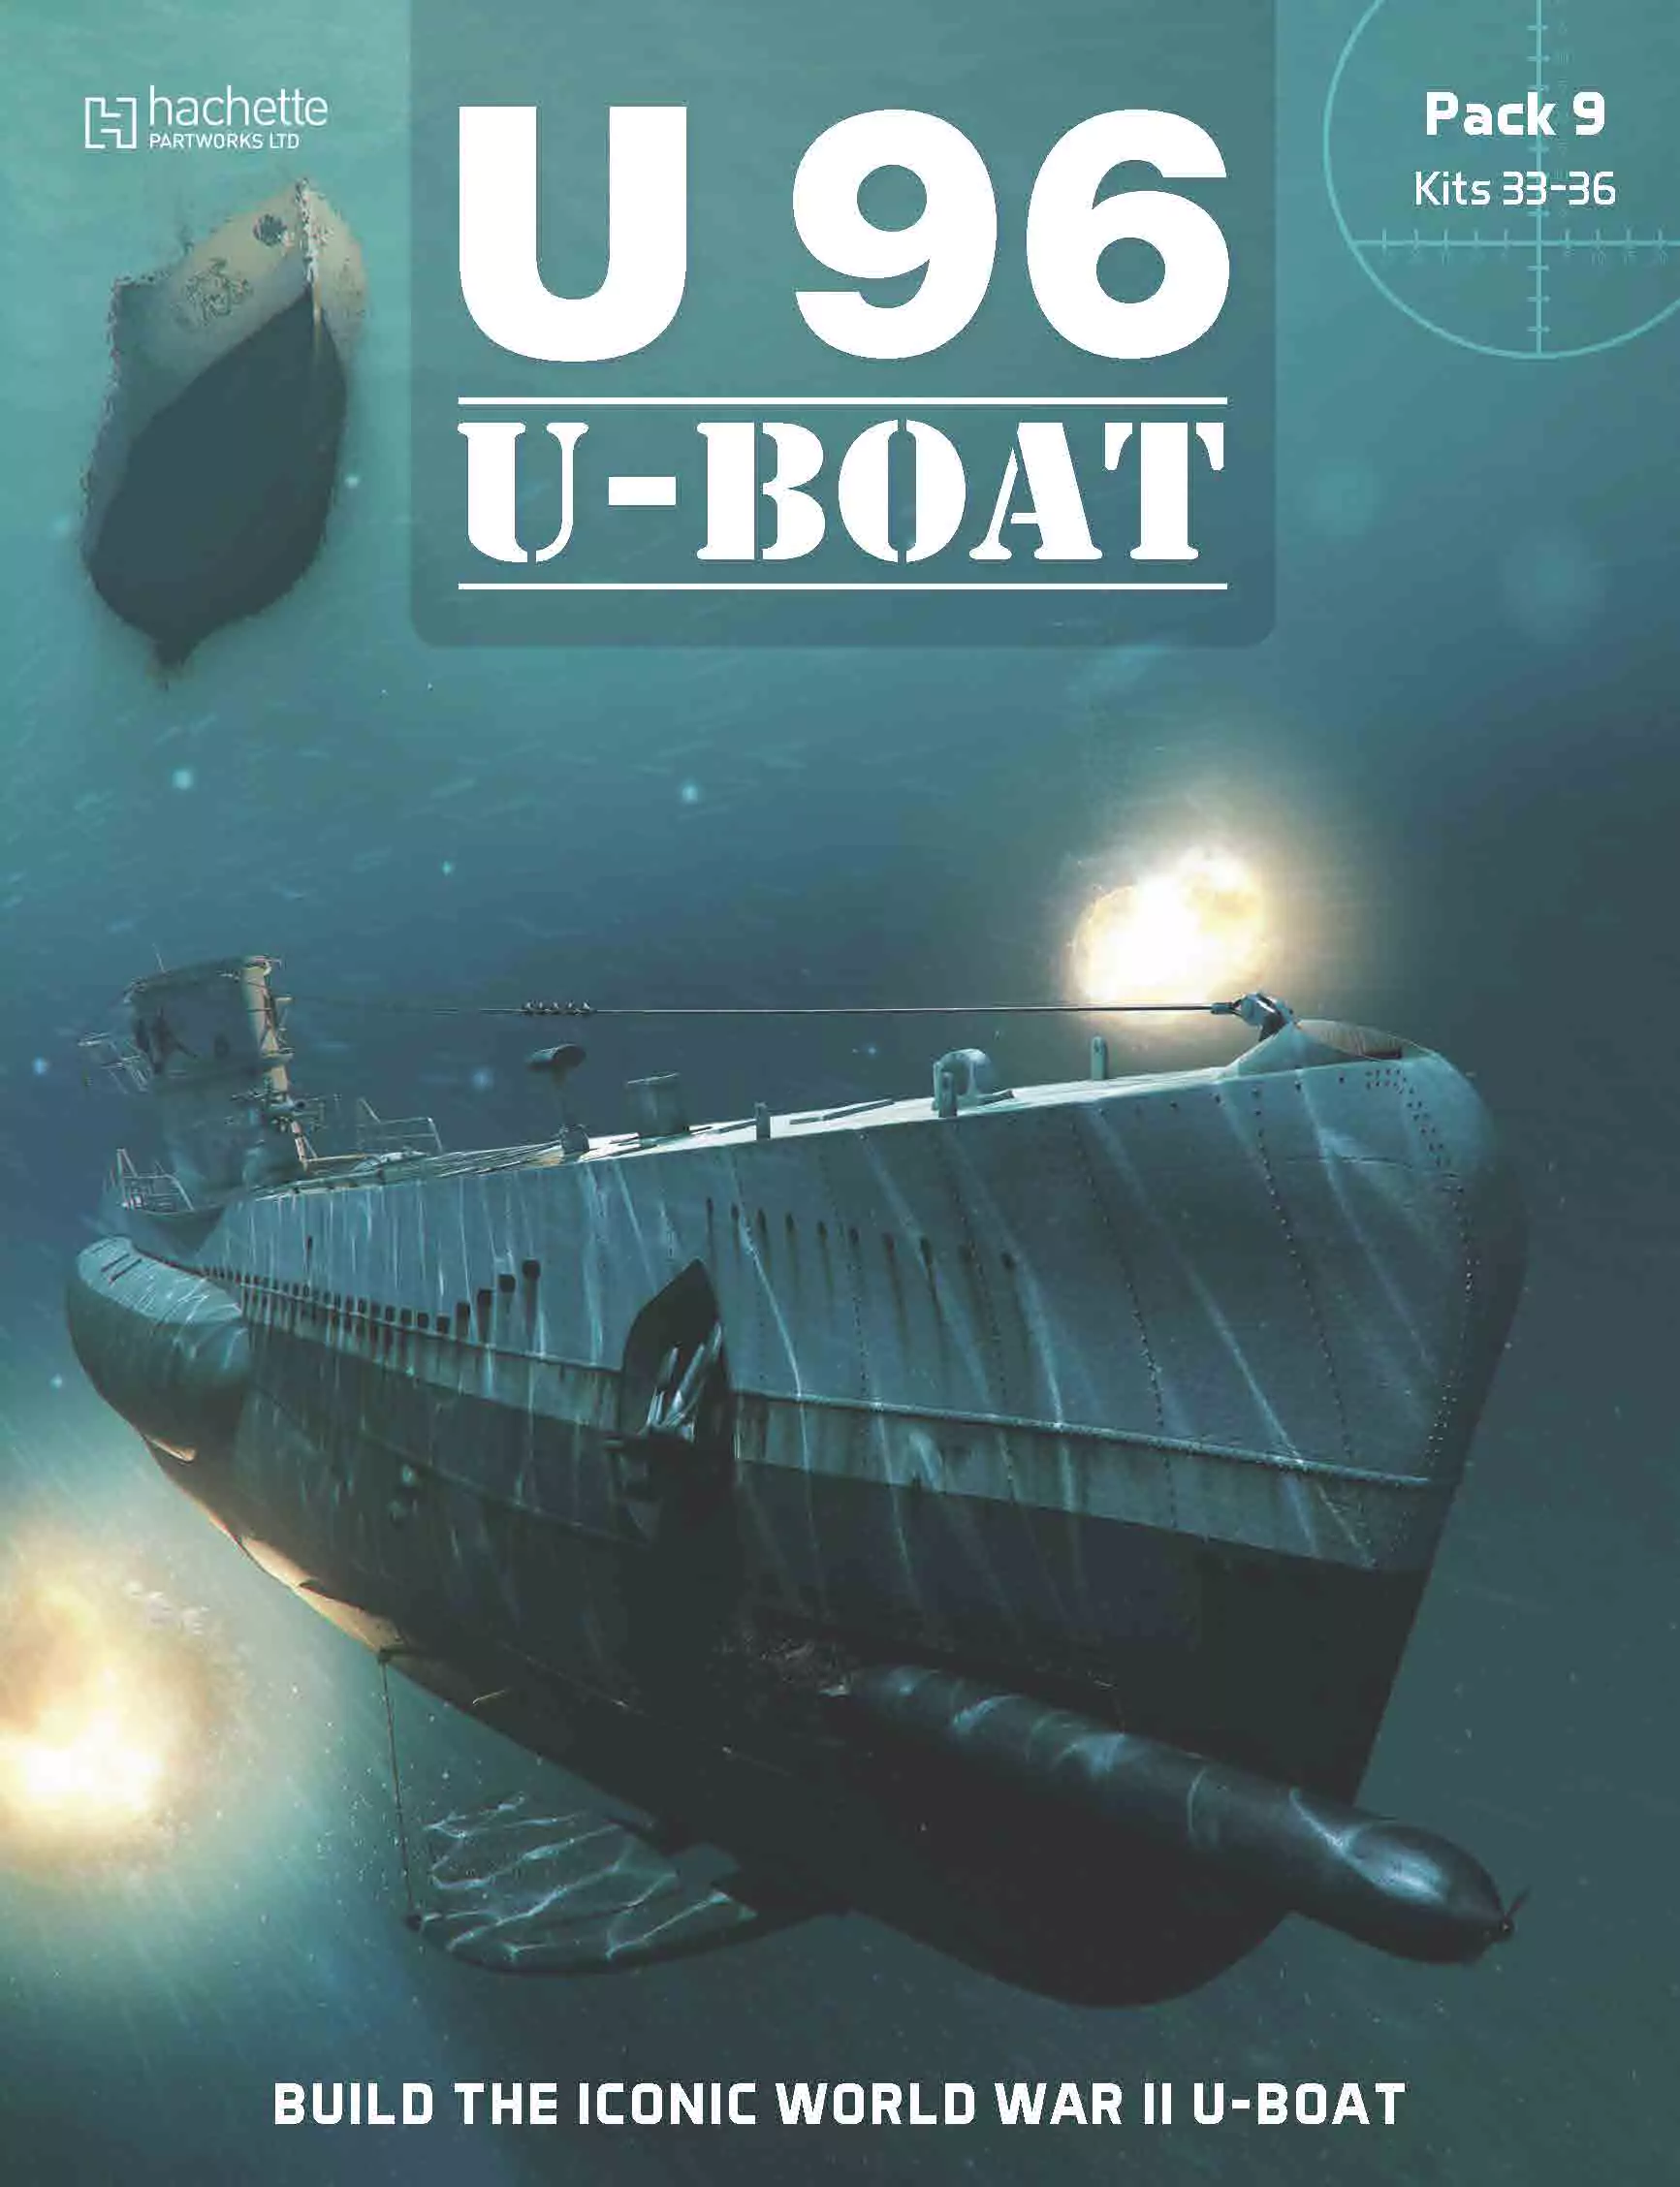 The U 96 U-BOAT